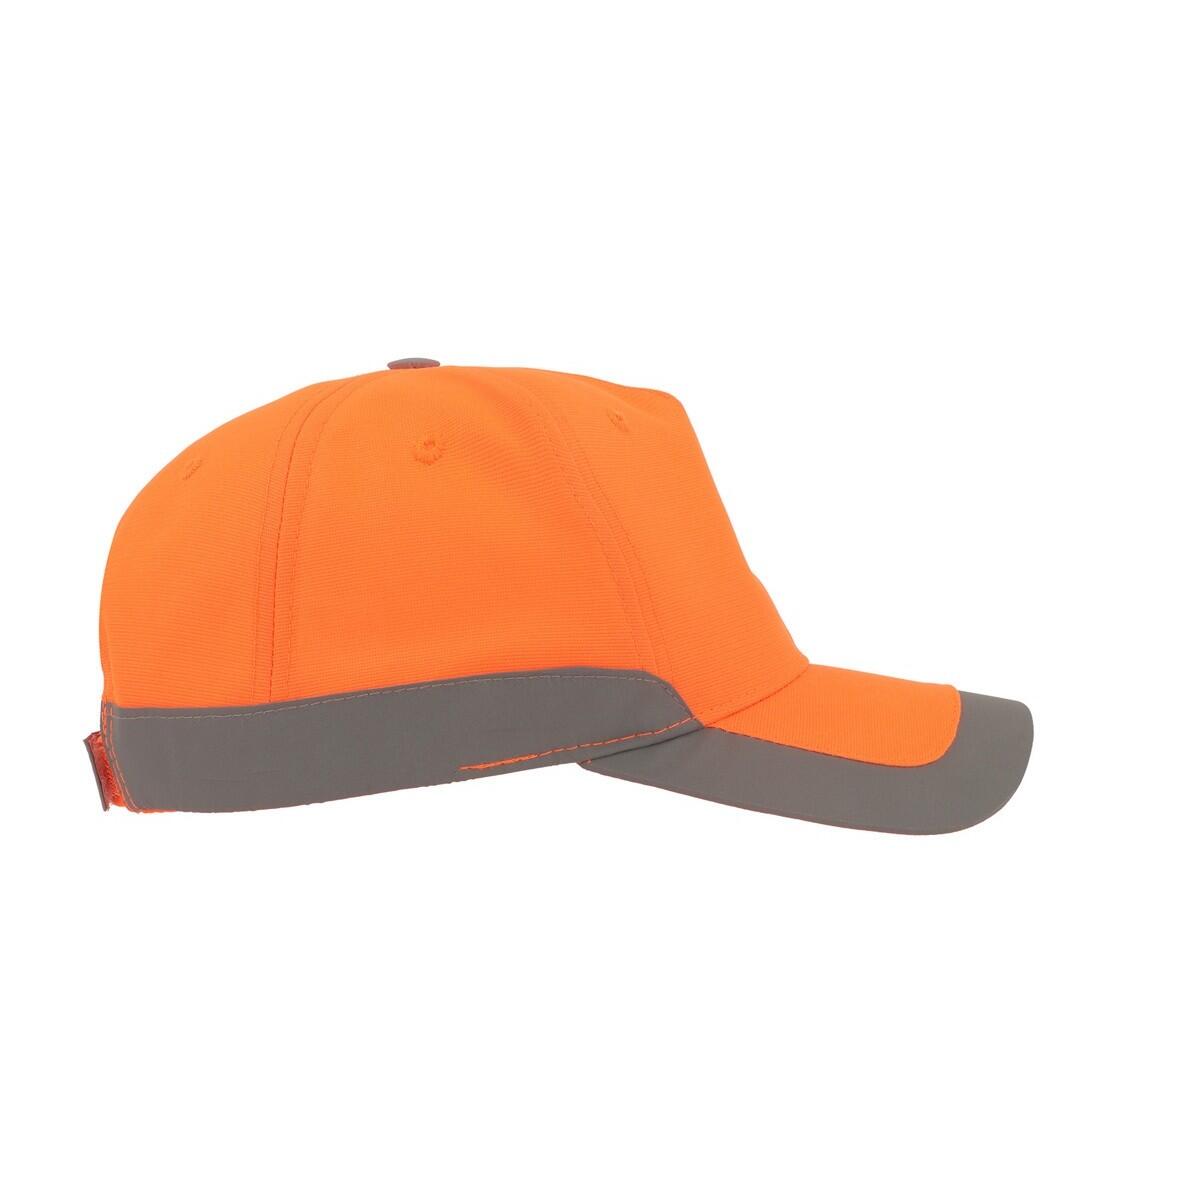 Helpy 5 Panel Reflective Cap (Safety Orange) 4/5